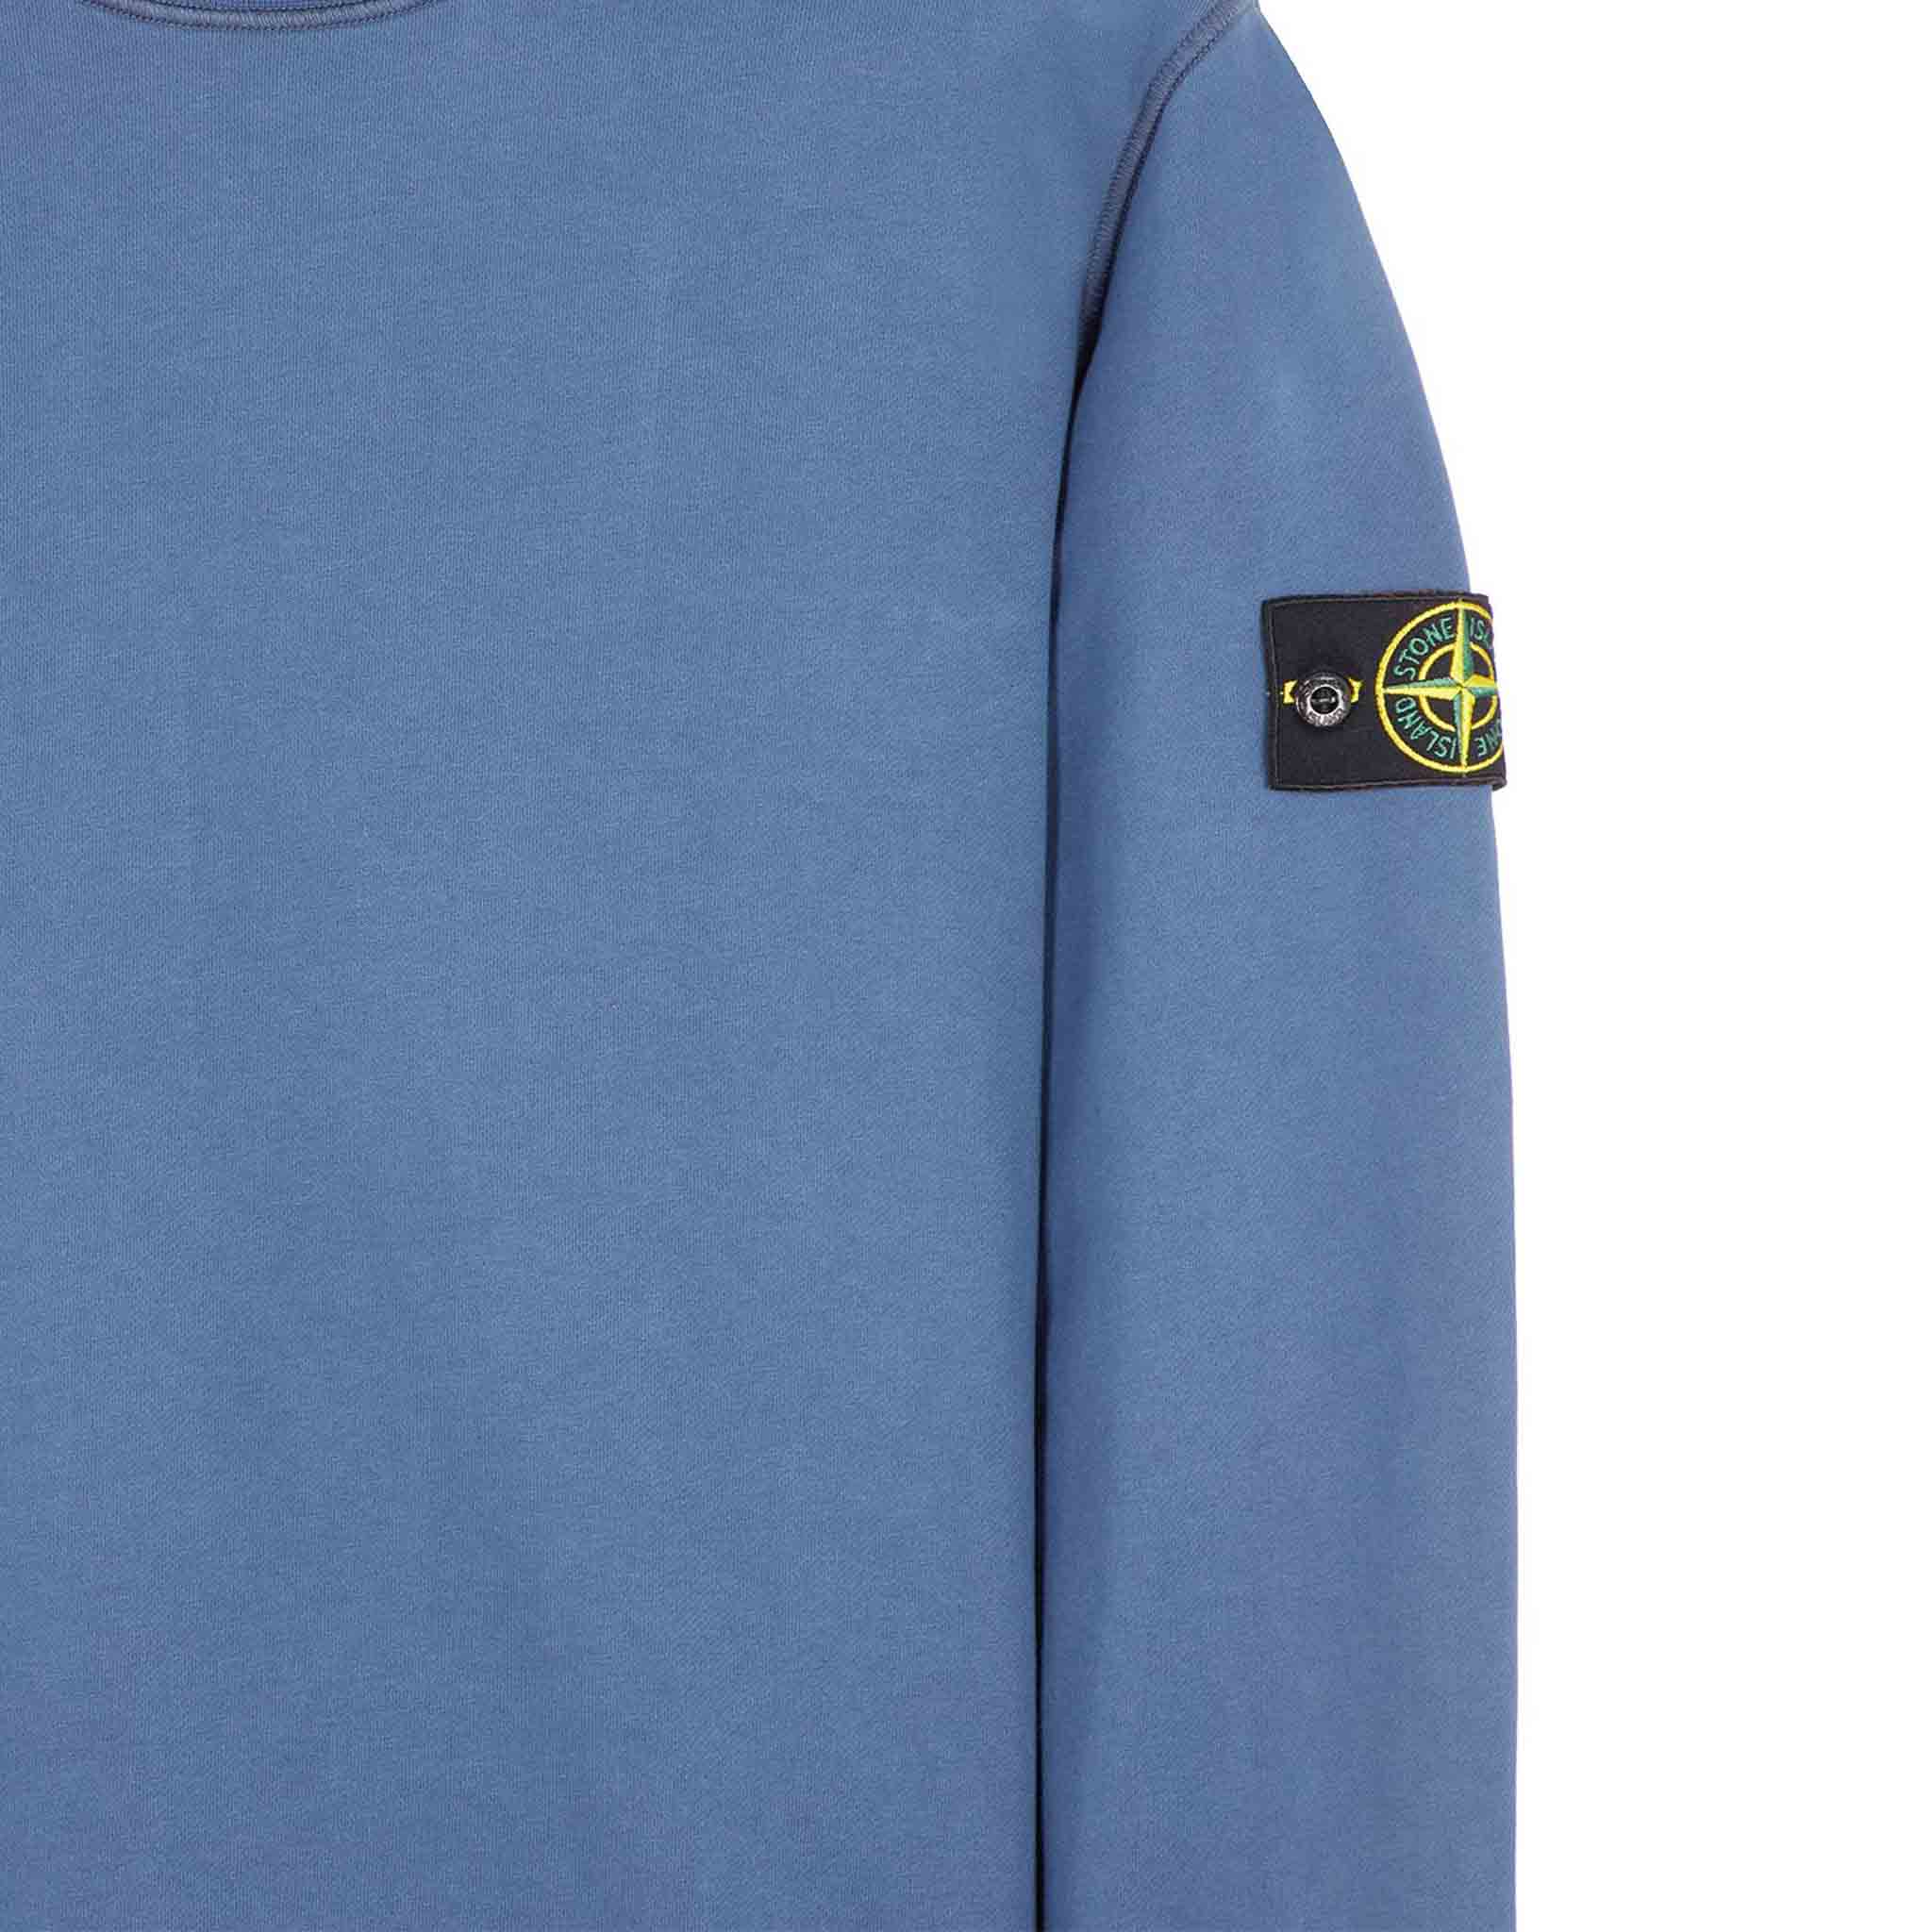 Stone Island Garment Dyed Crewneck Sweatshirt in Avio Blue